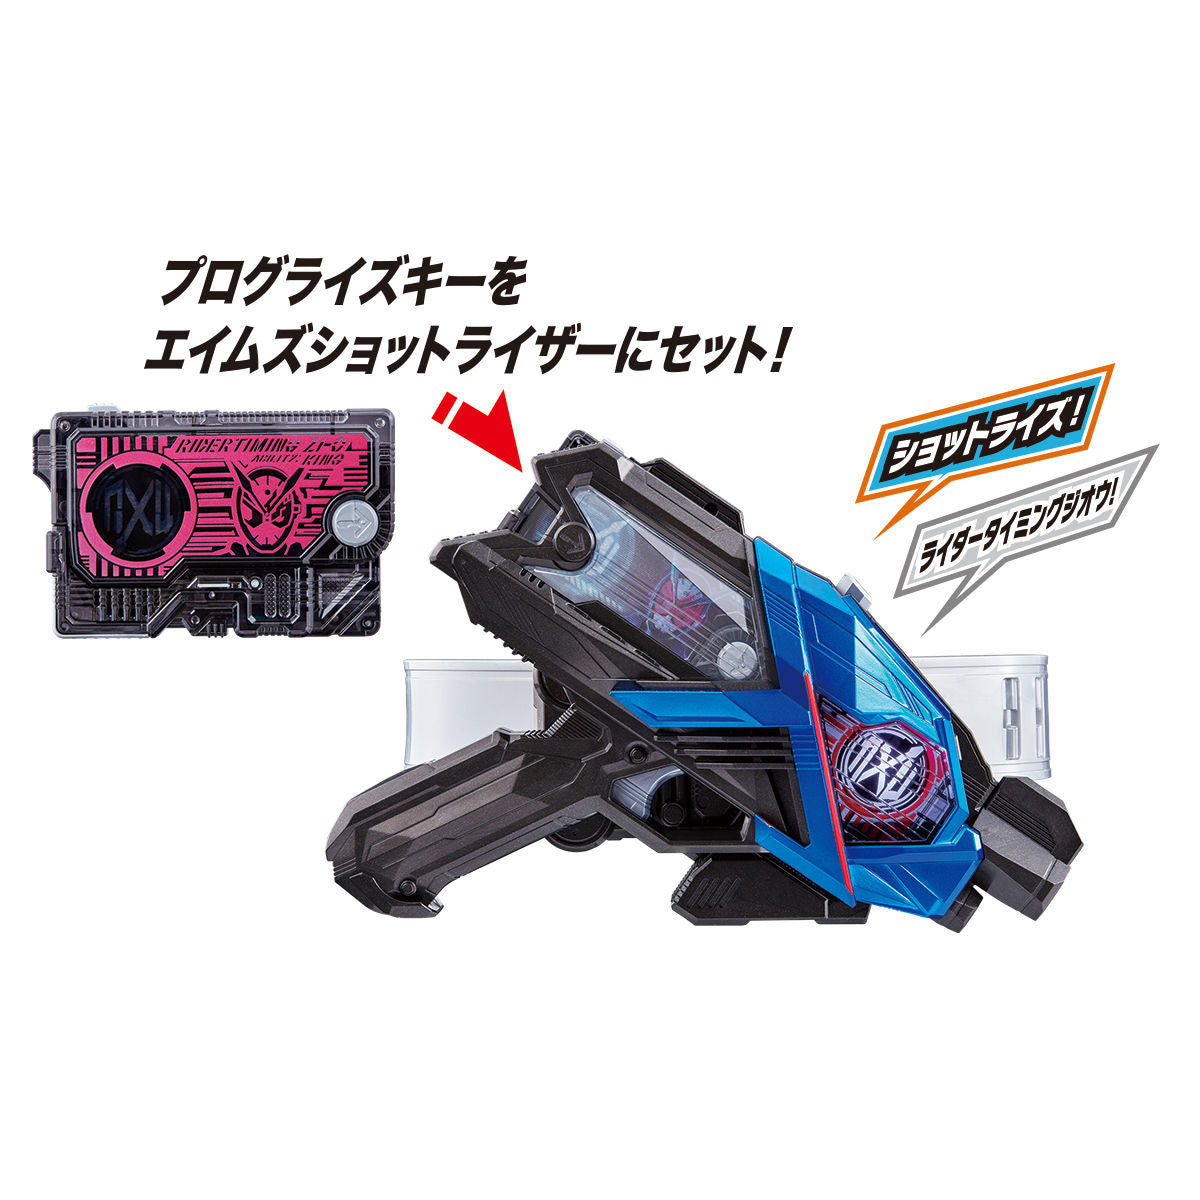 DX Rider Timing Zi-O Progrise Key